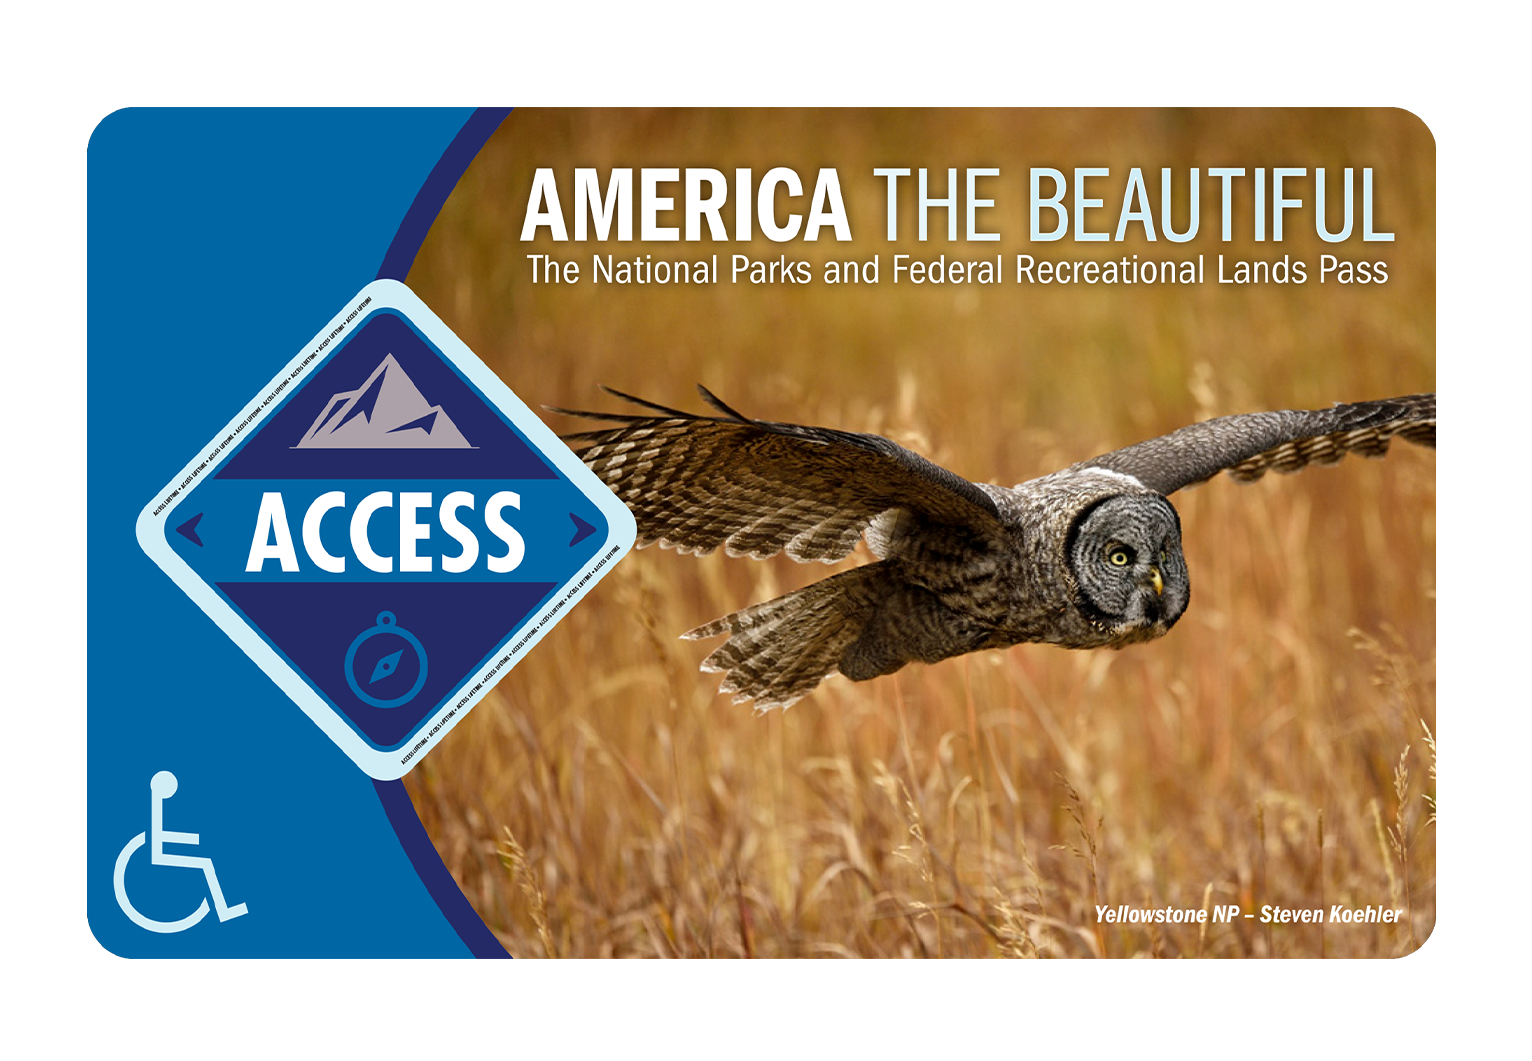 America the Beautiful Access Pass